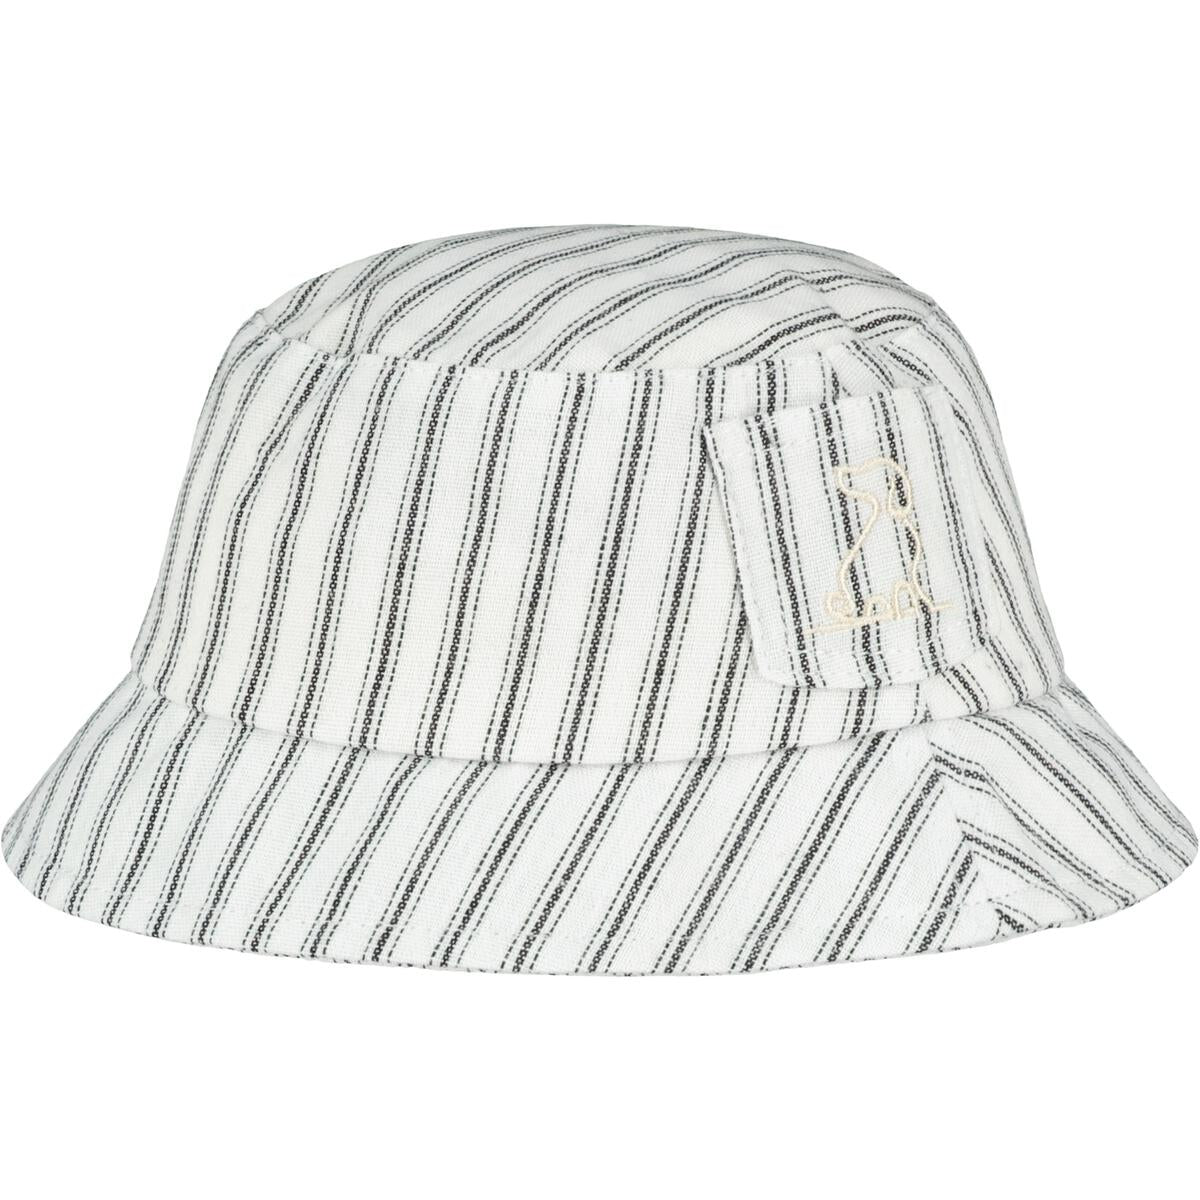 Fisherman Bucket Hat - Black/White Stripe